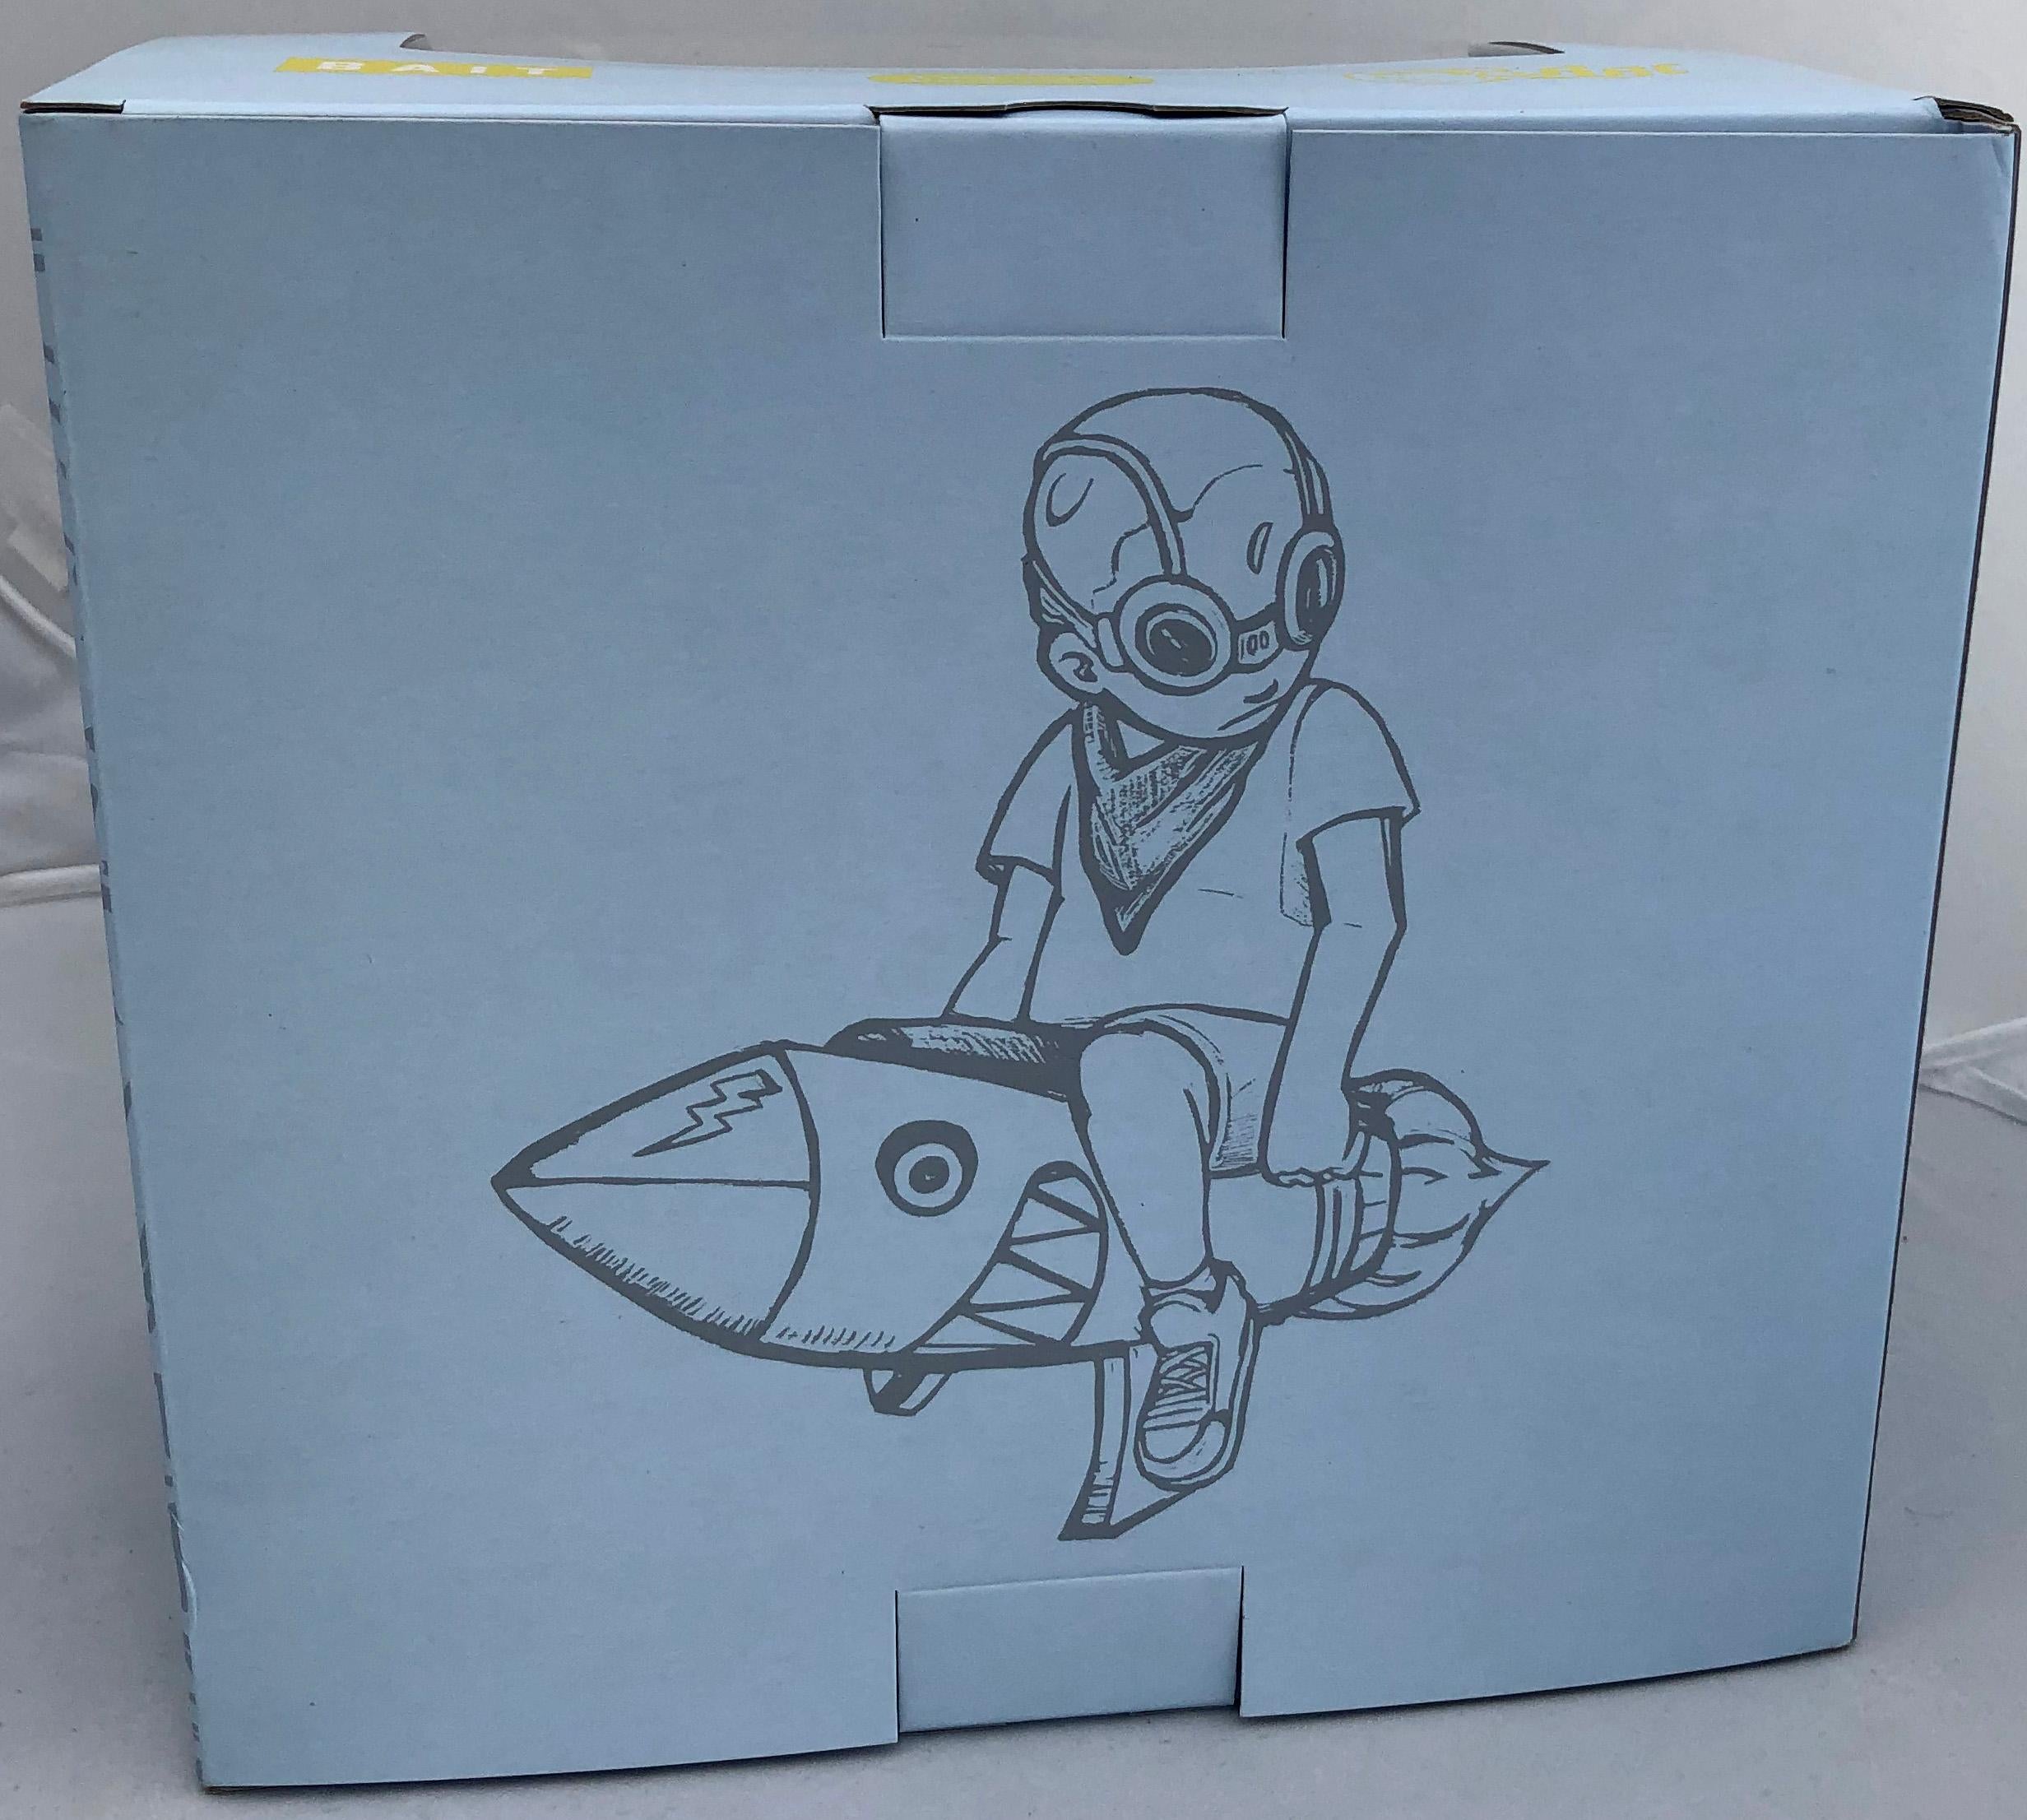 Hebru Brantley Flyboy Pop Art Sculpture / Hebru Brantley Beyond the Beyond, 2018. New in its original packaging.

Medium: Painted cast vinyl. 
Dimensions: 9 x 8 x 4 inches (22.9 x 20.3 x 10.2 cm). 
New, never displayed; accompanied by original